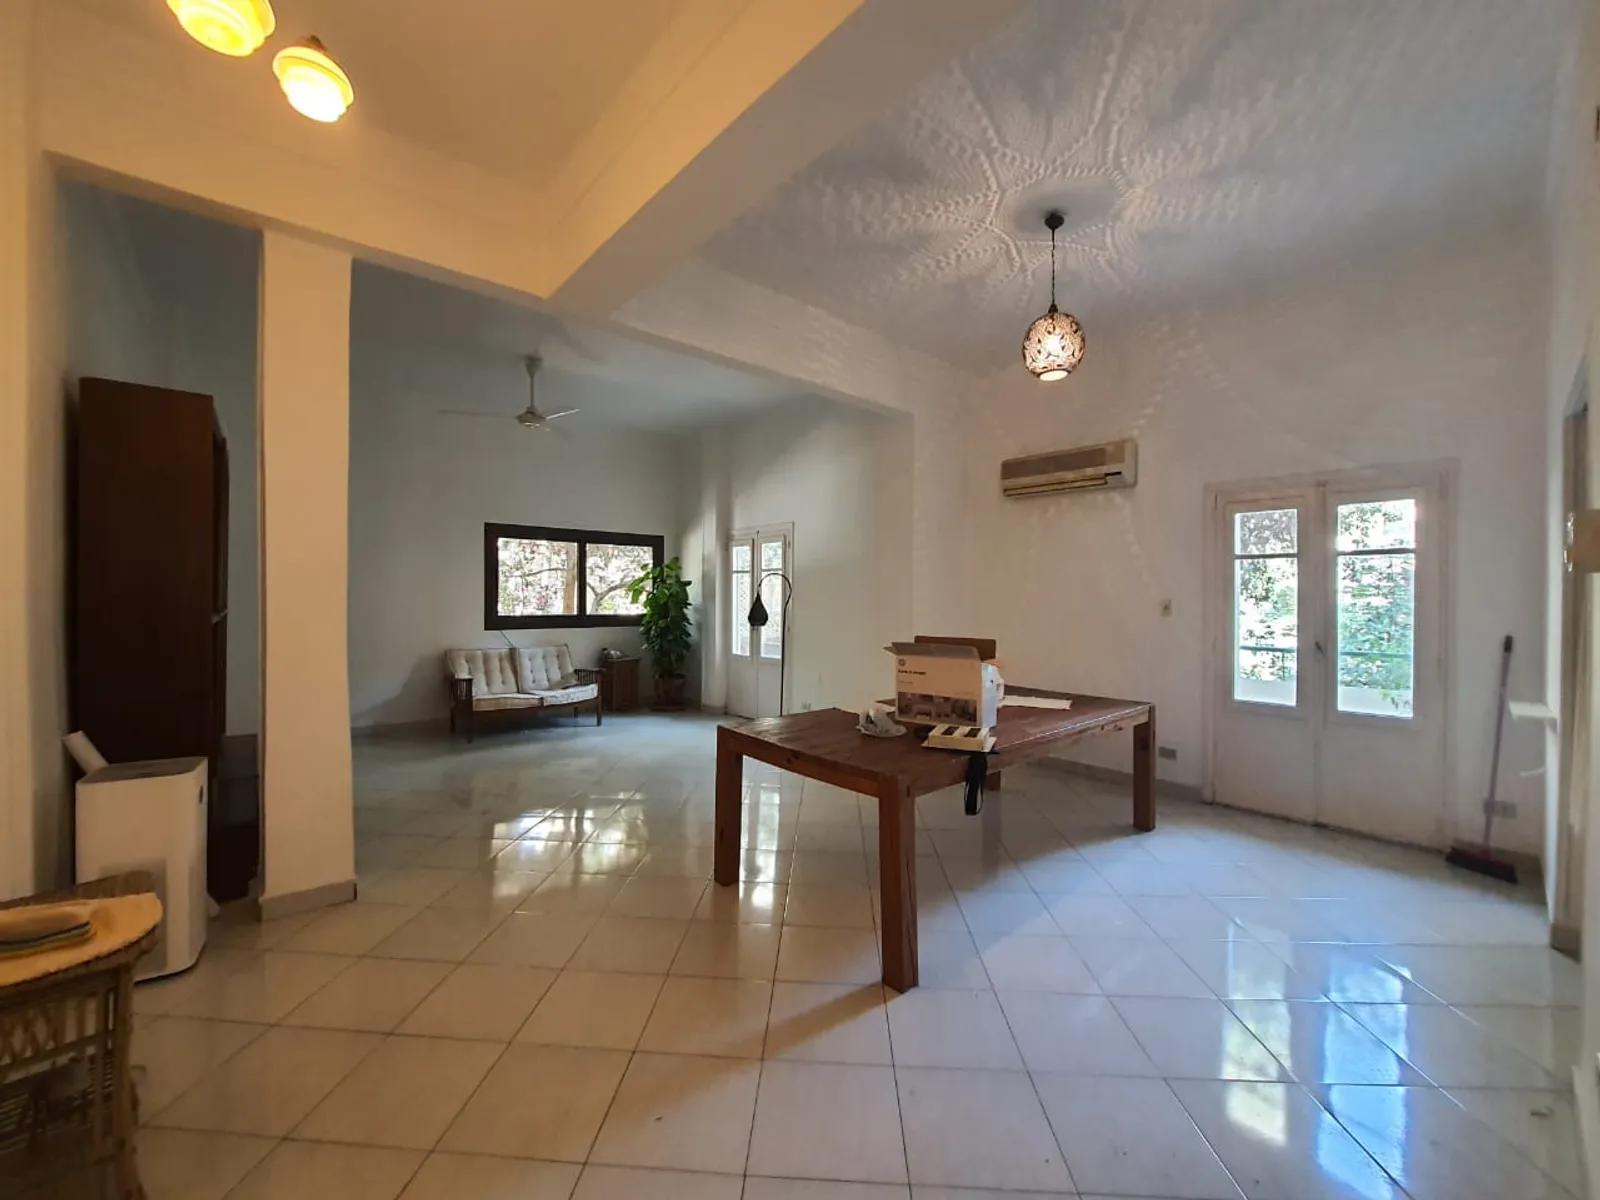 Apartments For Sale In Maadi Maadi Sarayat Area: 202 m² consists of 3 Bedrooms 2 Bathrooms Furnished 5 stars #5362